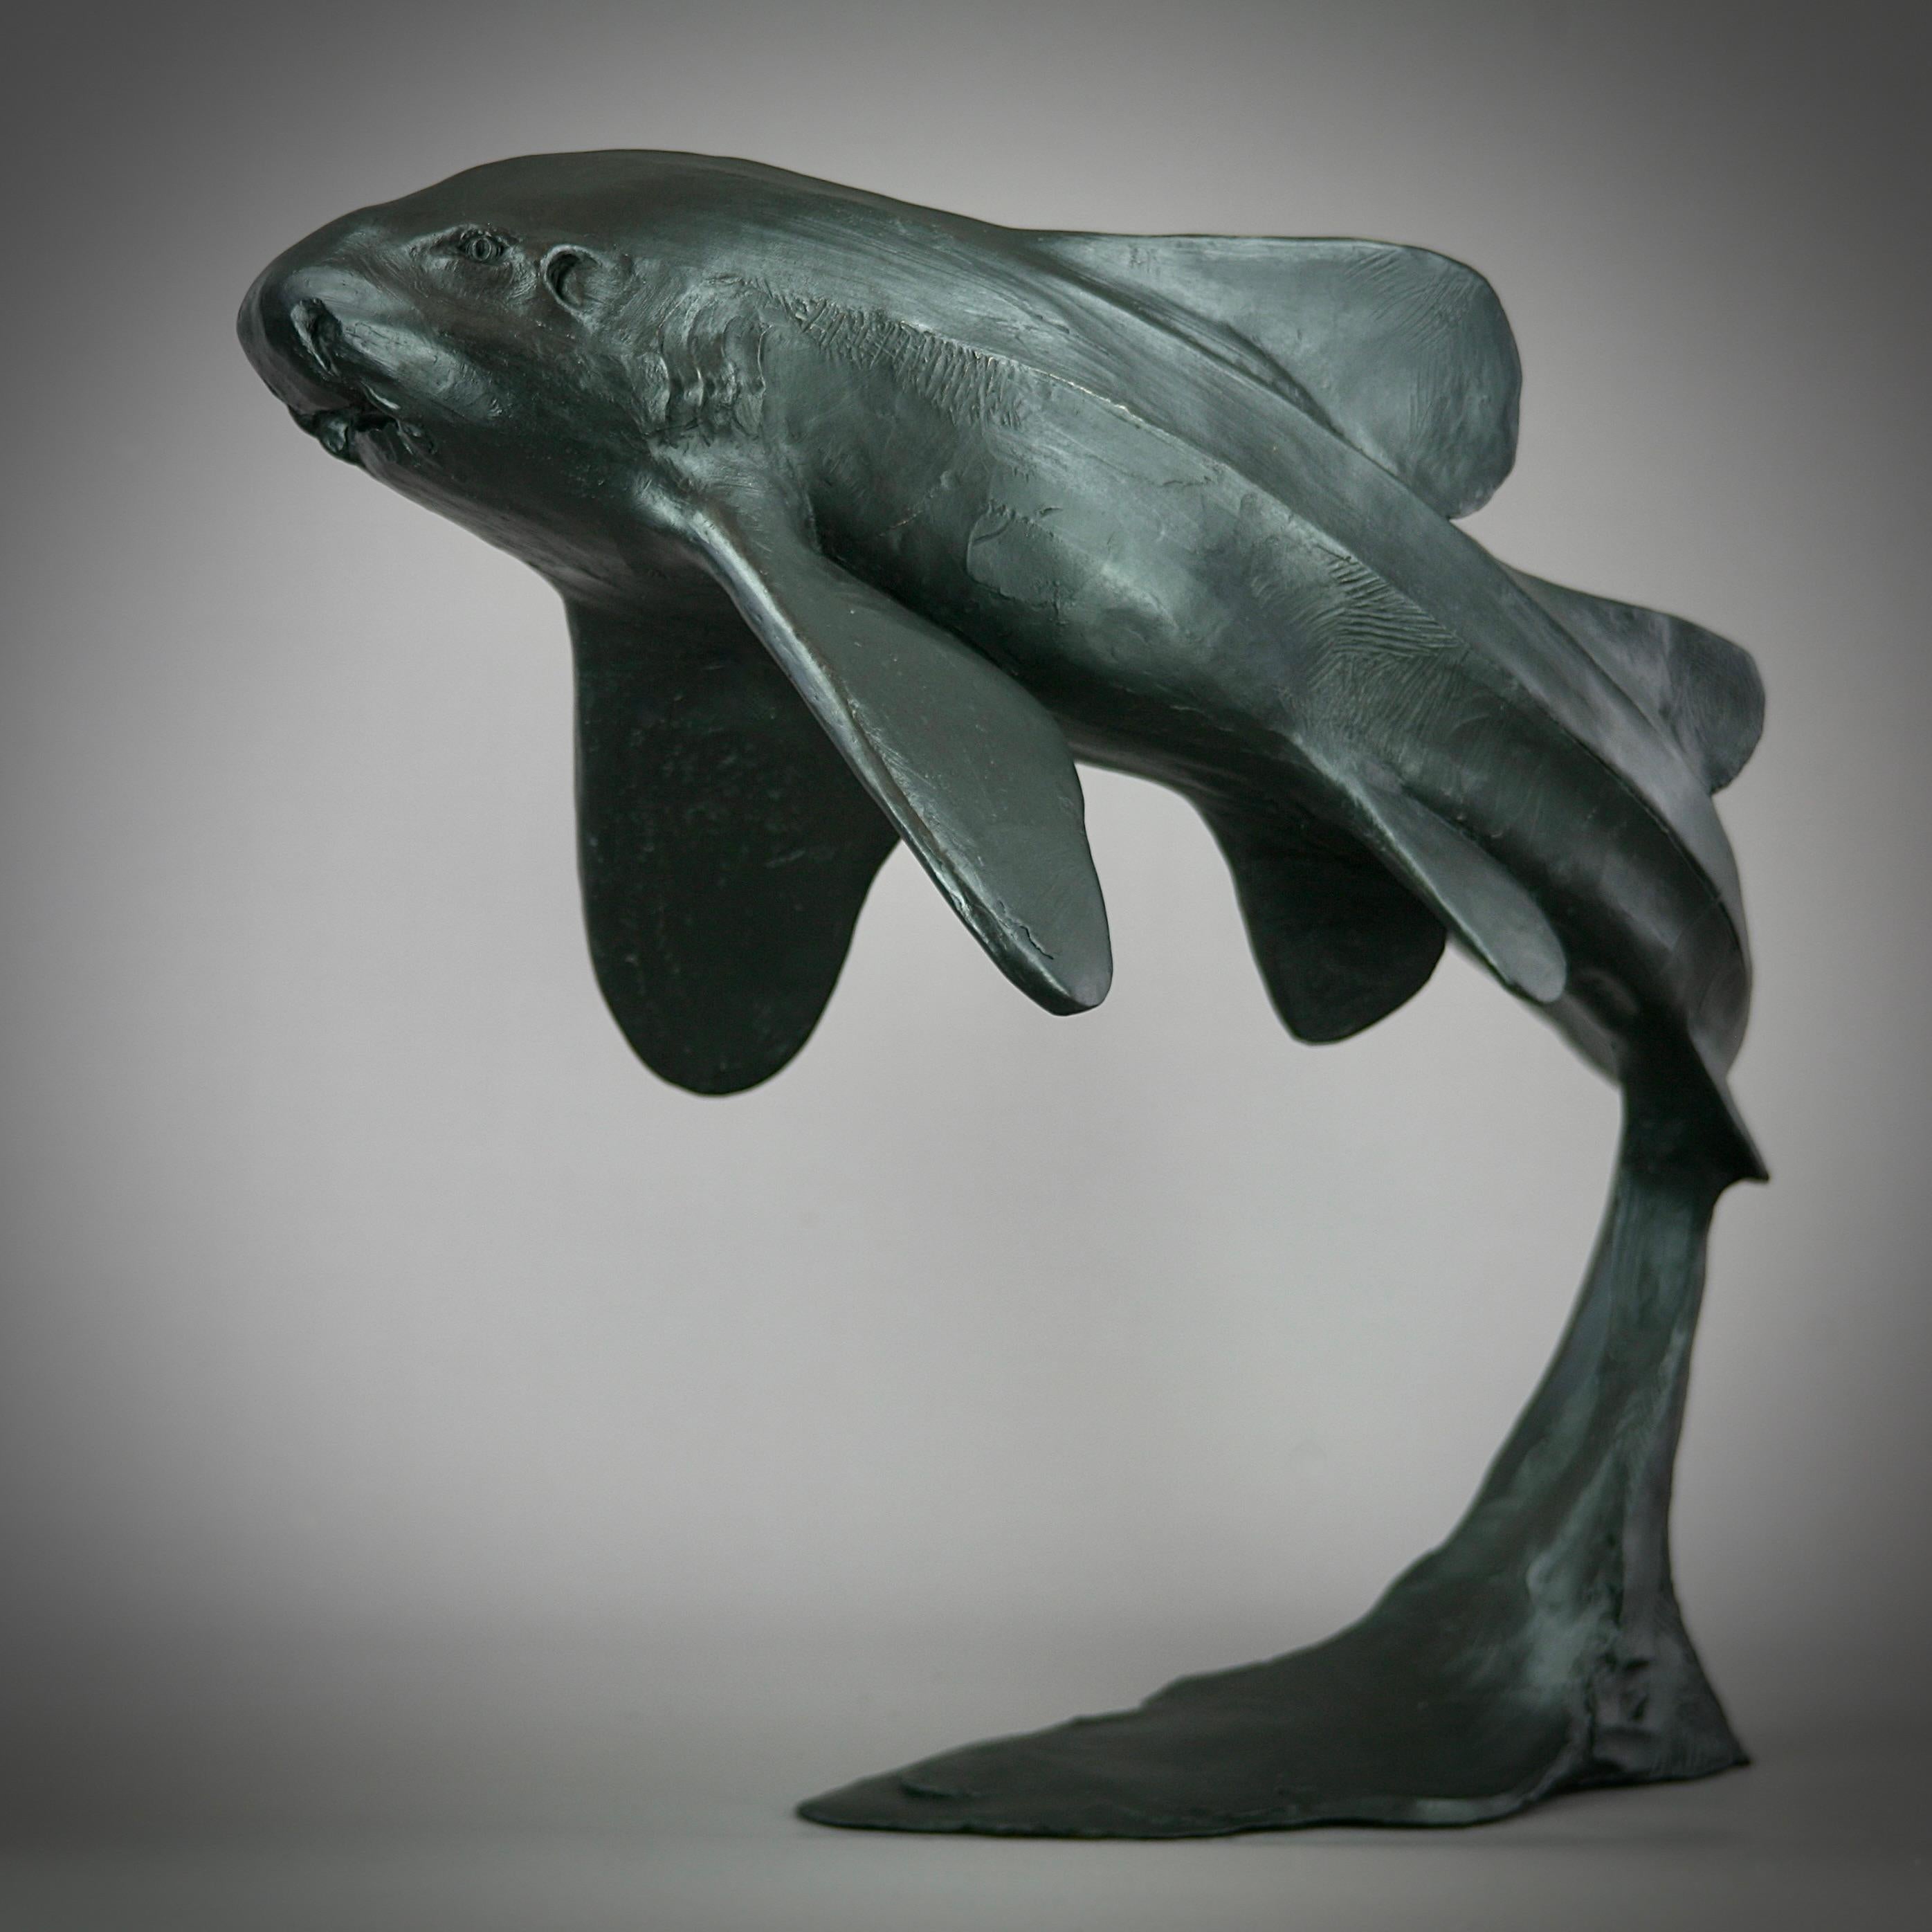 Zebra Shark - sculpture marine originale en bronze moderne - Contemporary Art - Réalisme Sculpture par Andrzej Szymczyk